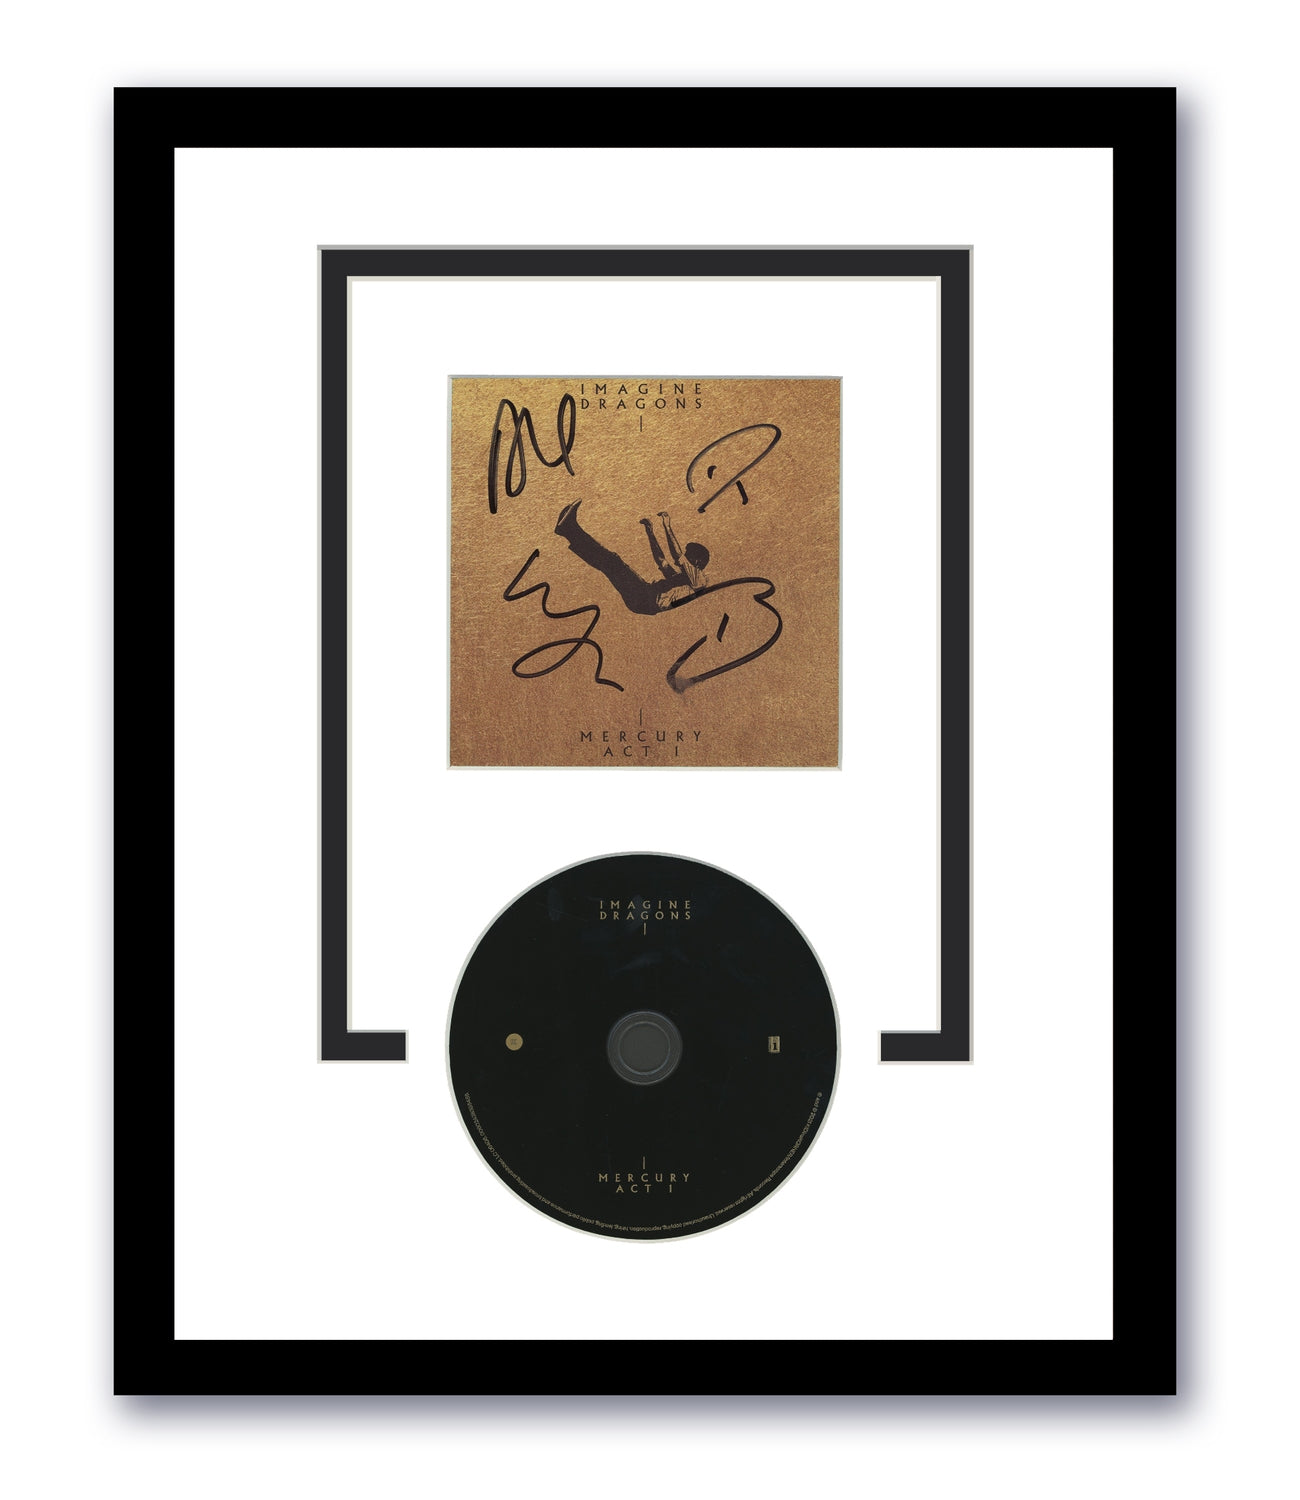 Imagine Dragons Autographed Signed 11x14 Custom Framed CD Mercury Act I ACOA 2